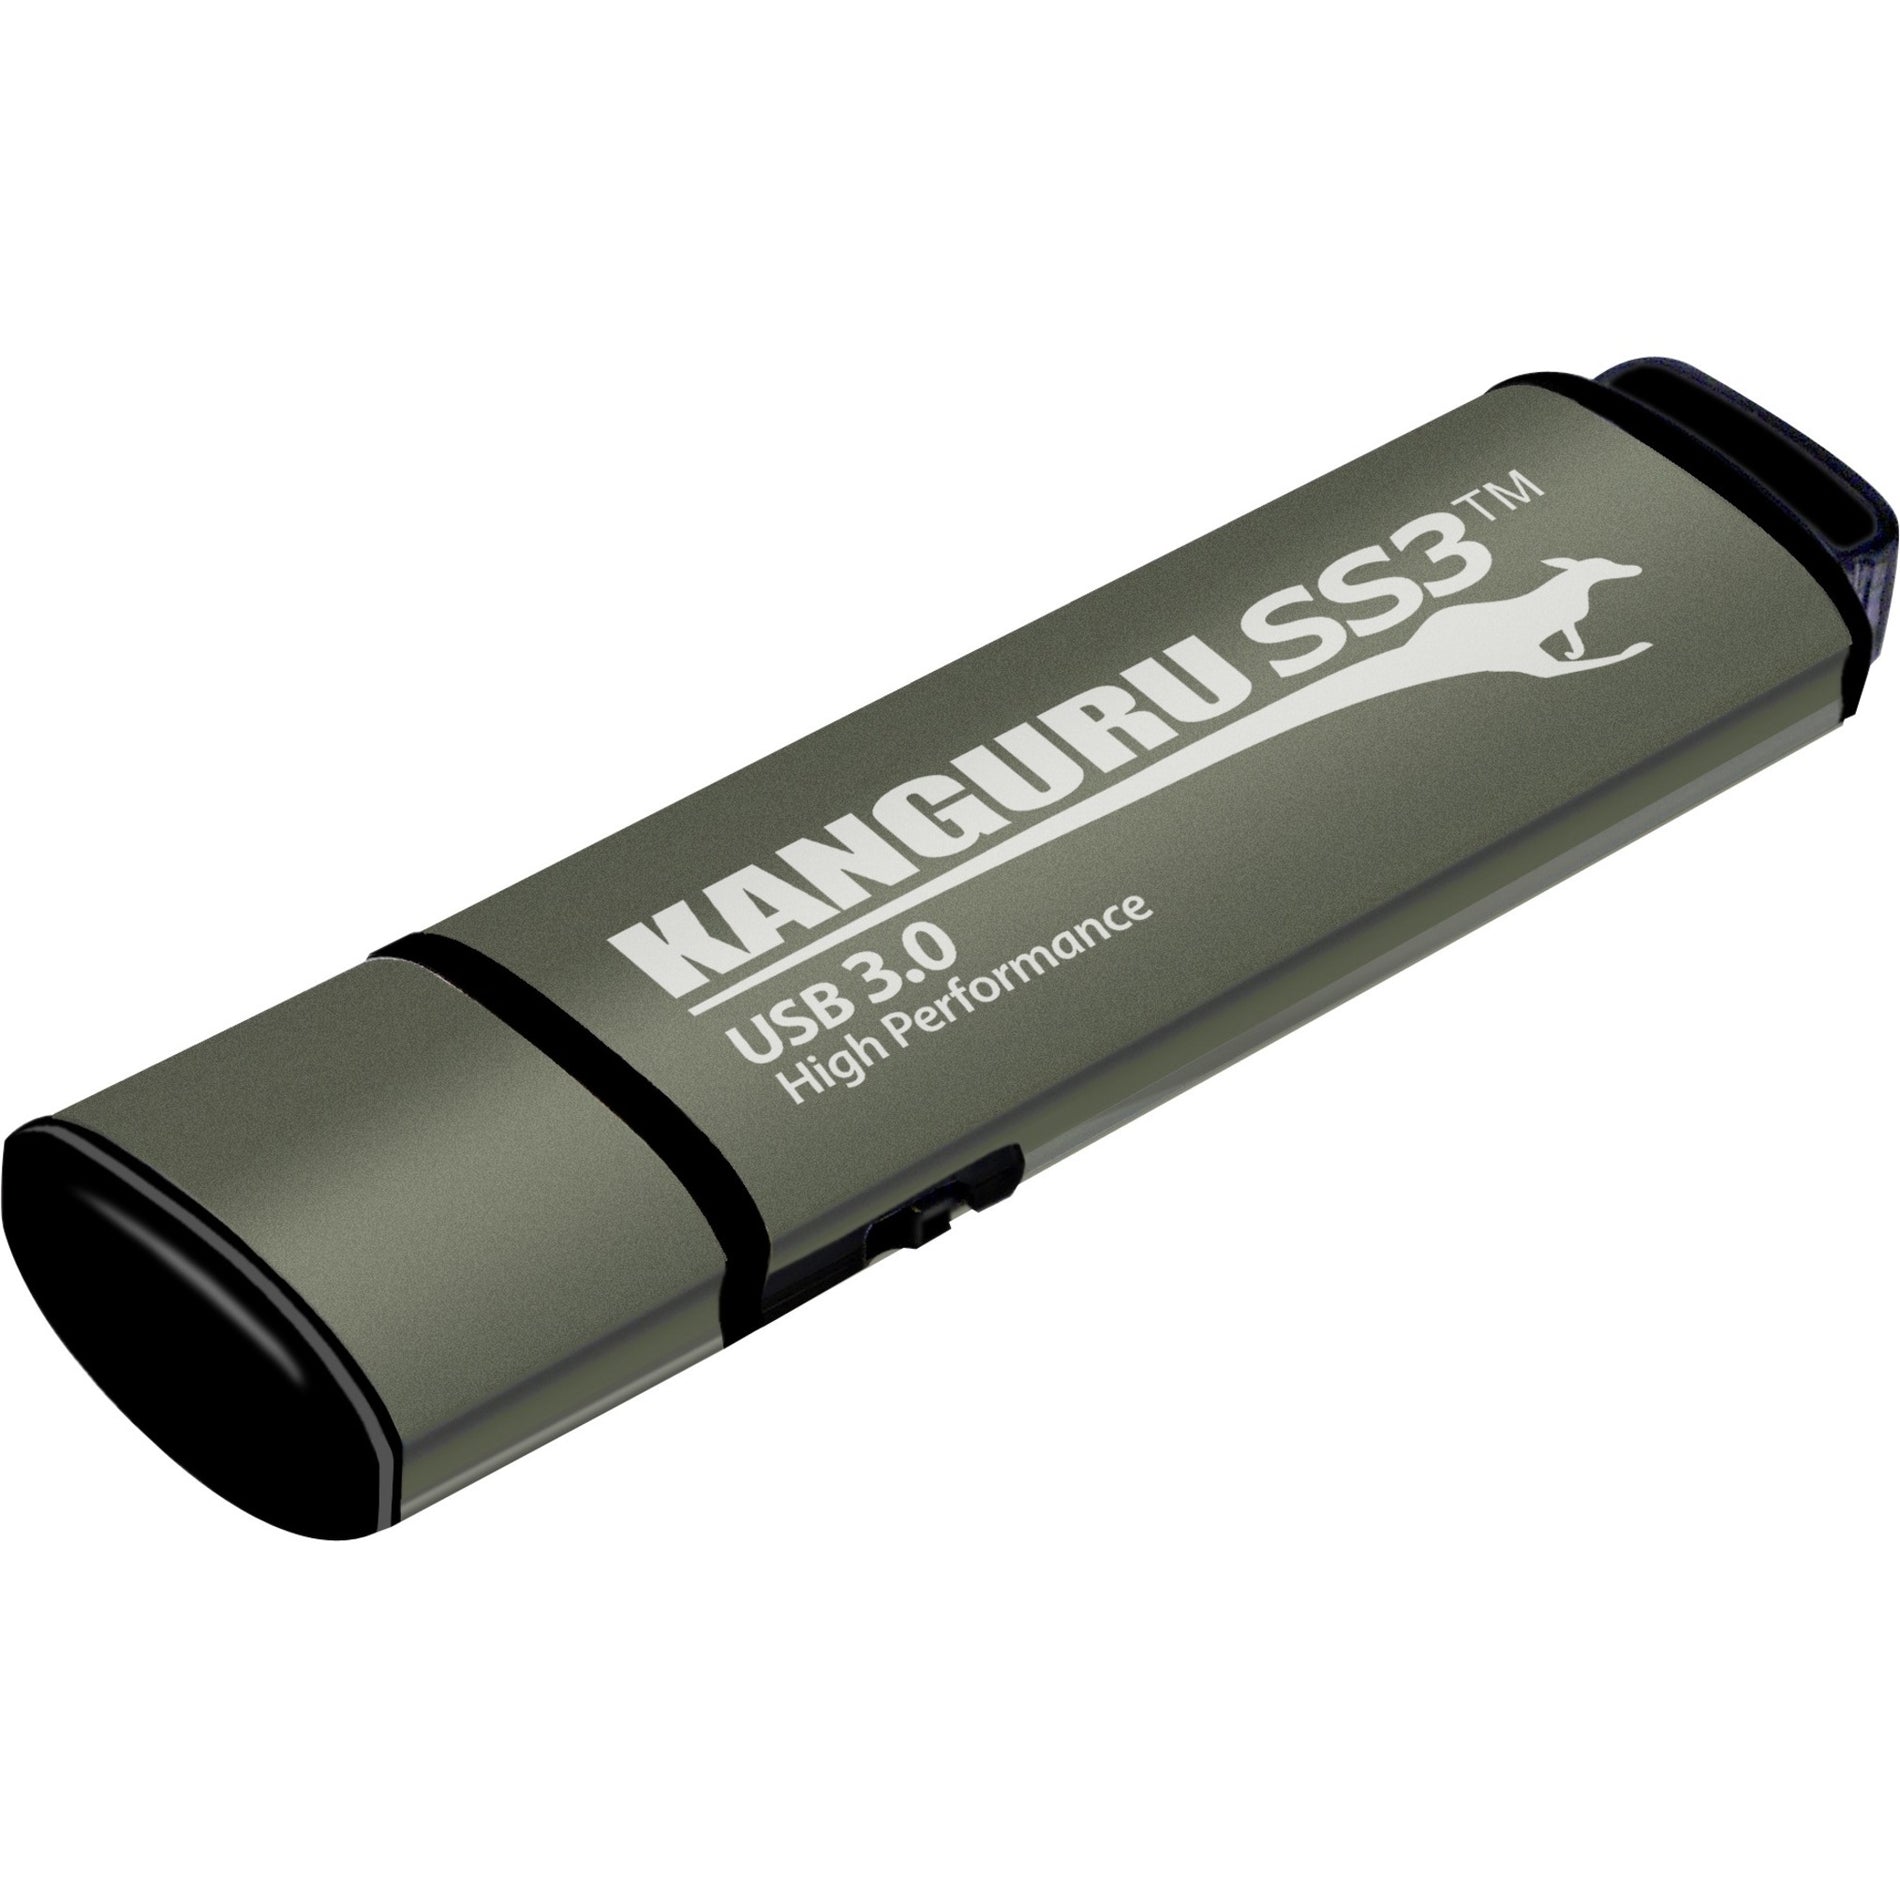 Kanguru KF3WP-128G SS3 USB 3.0 Flash Drive with Write Protect Switch, 128GB Storage Capacity